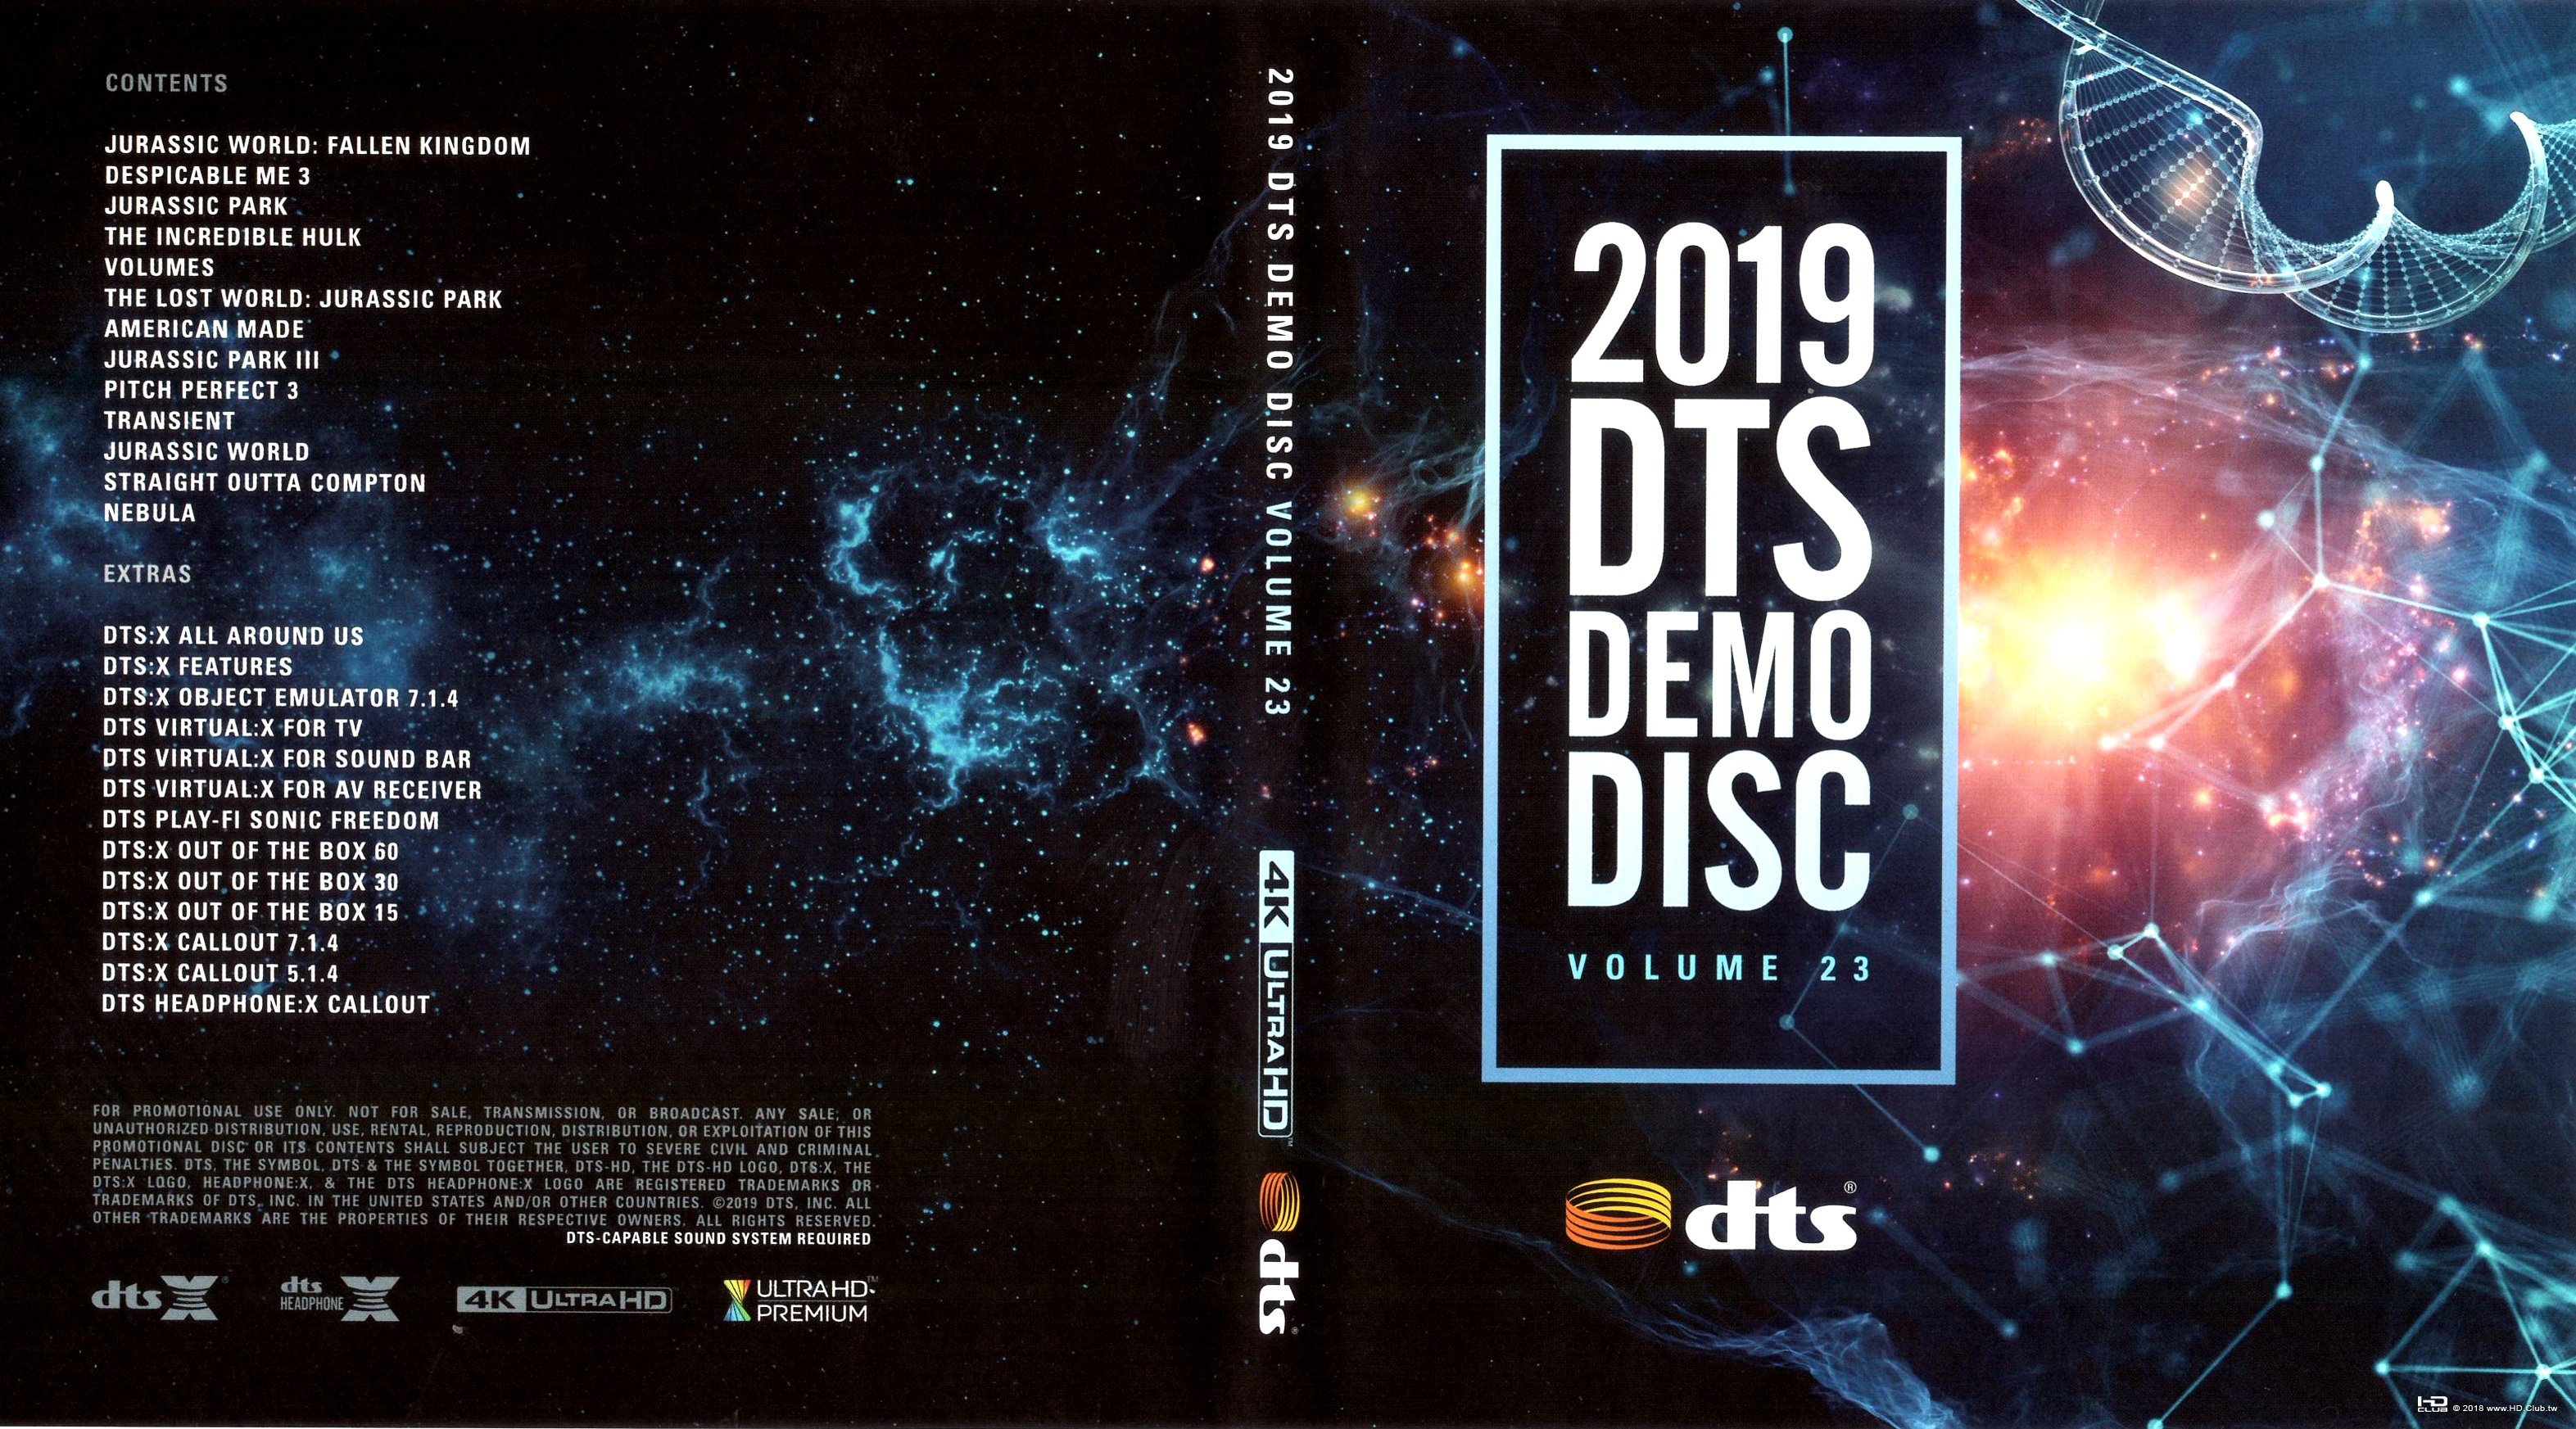 2019-dts-demo-disc-23-fbig.jpg